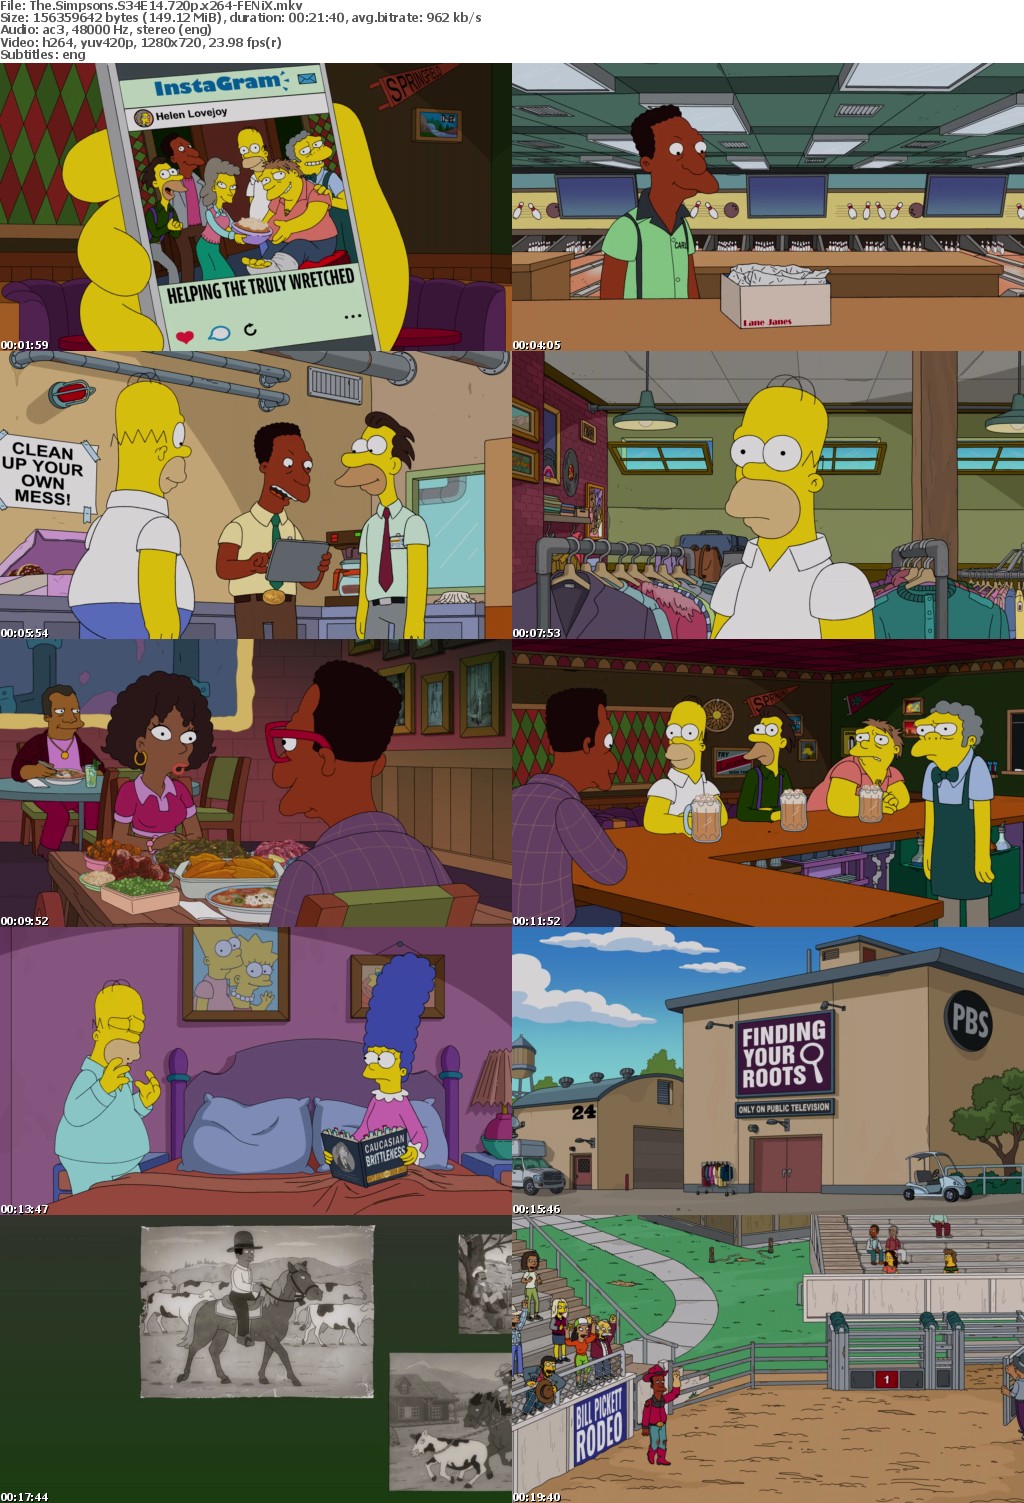 The Simpsons S34E14 720p x264-FENiX